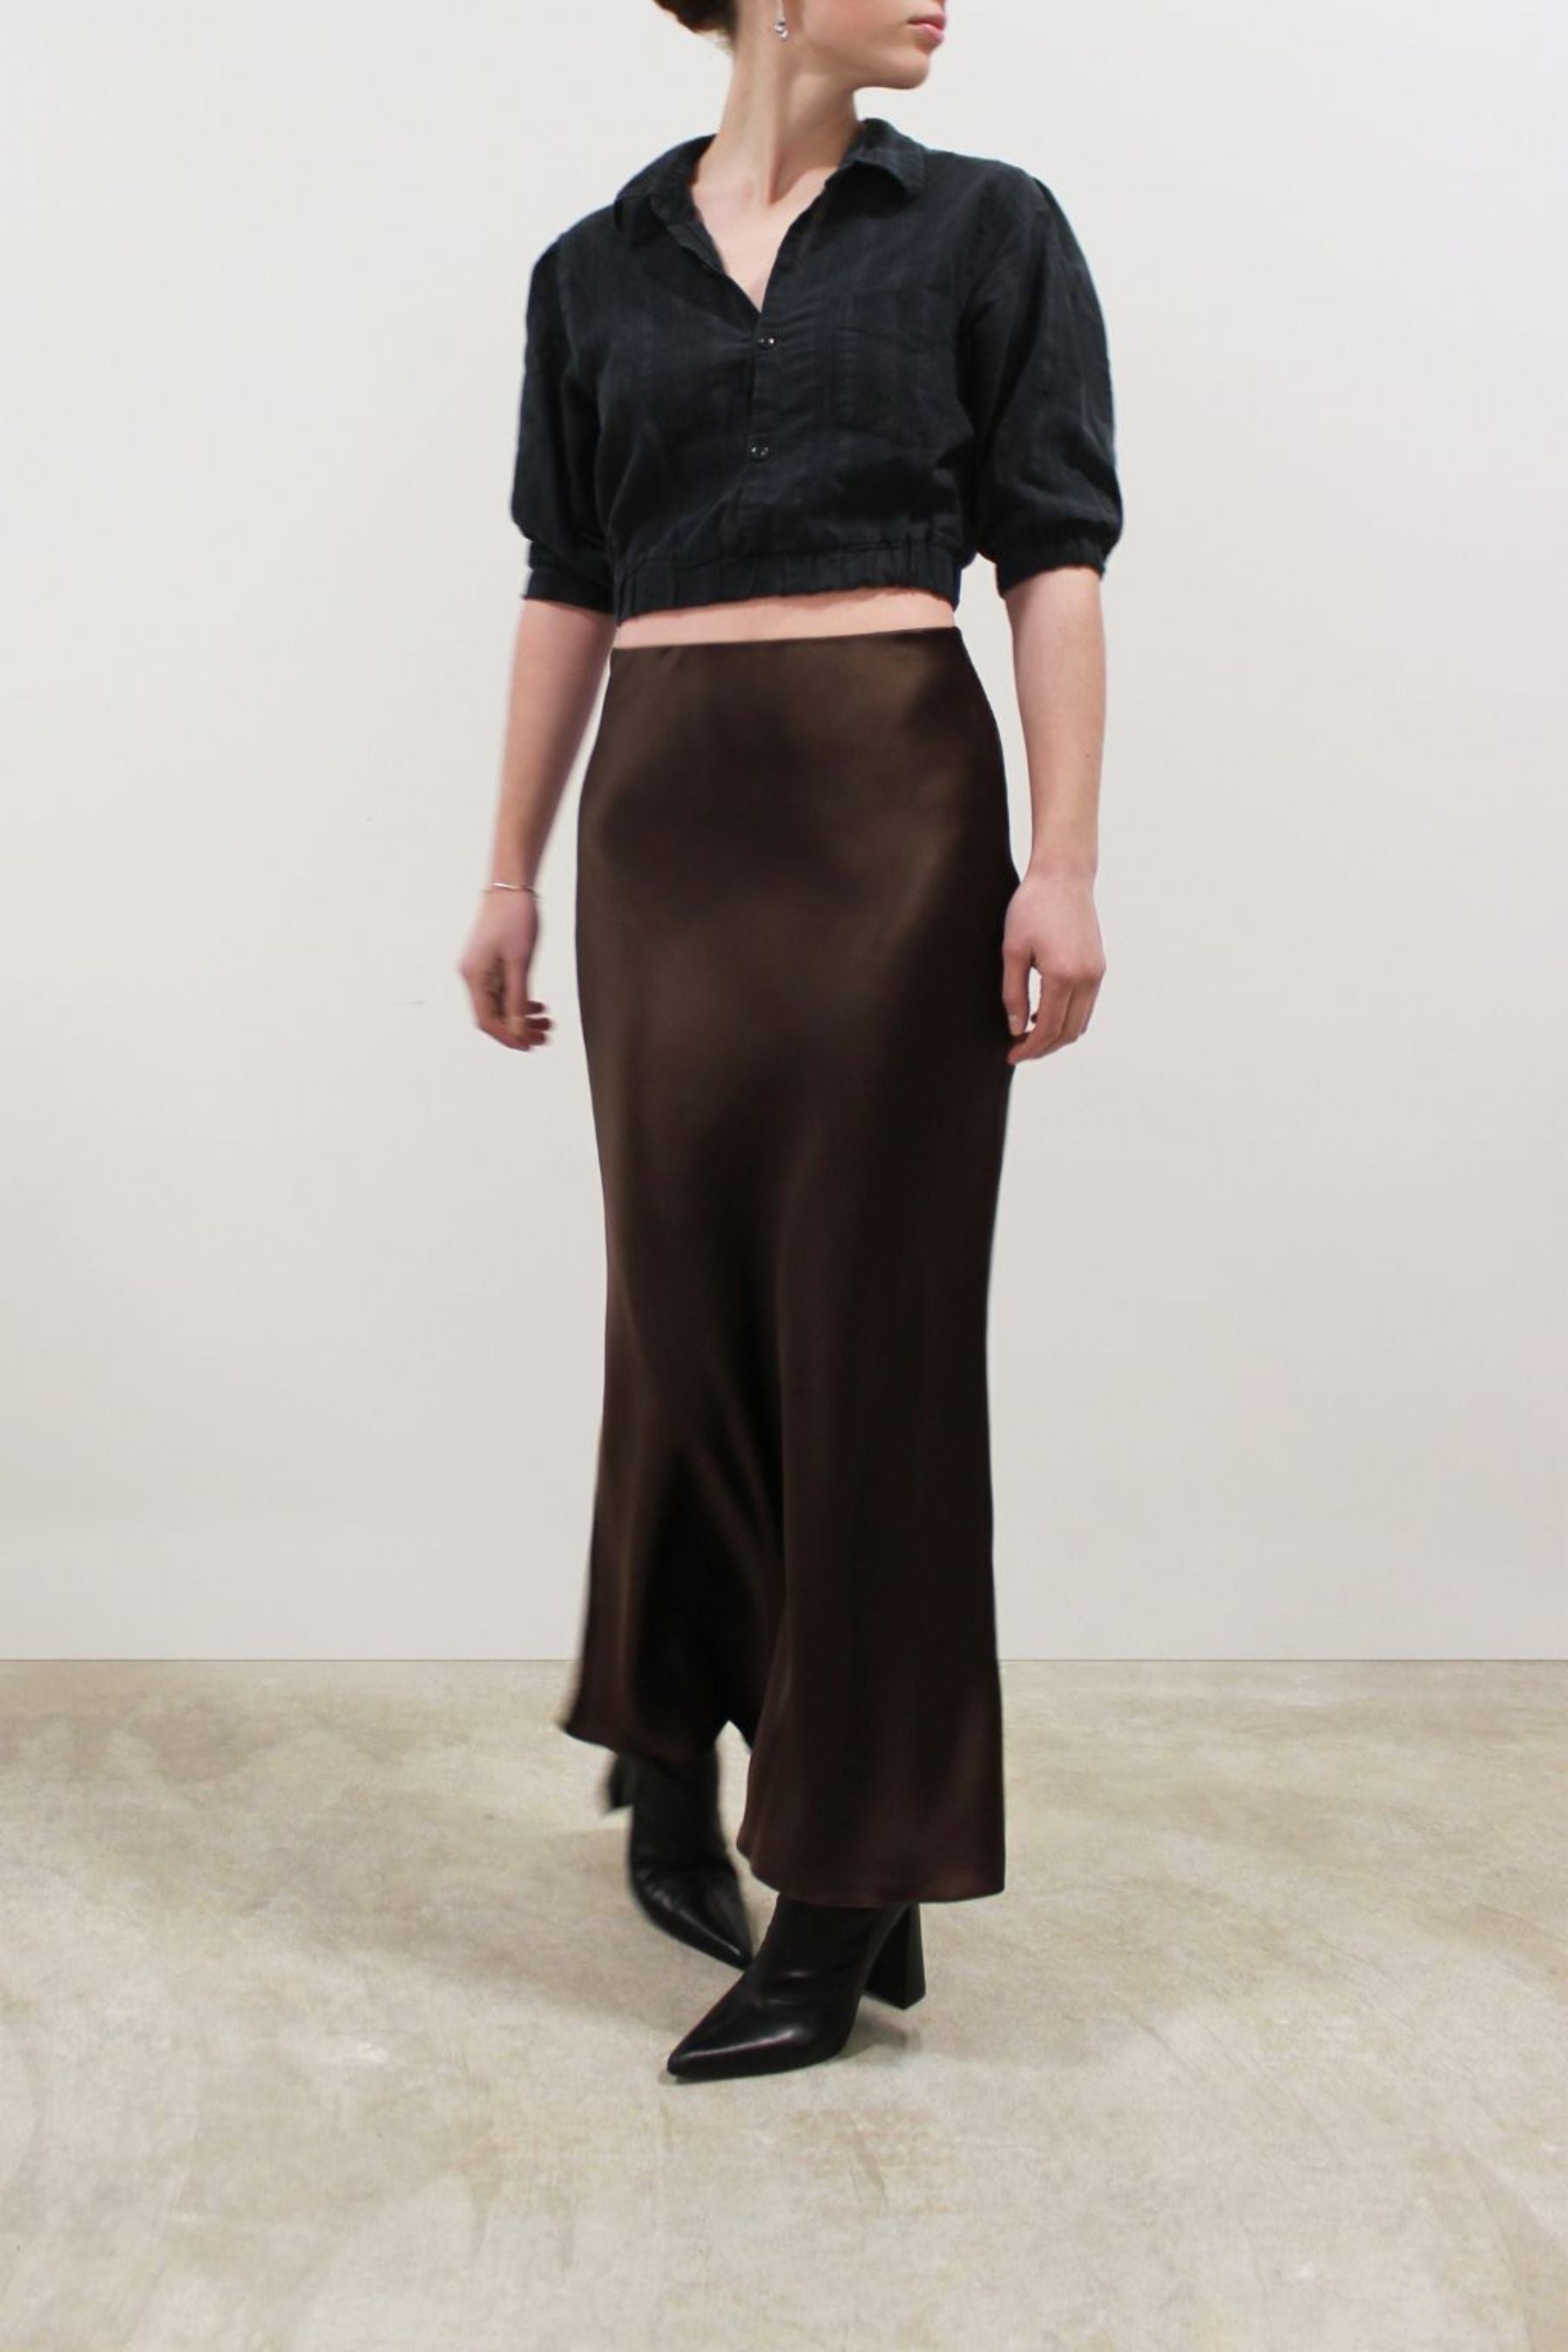 JACOBA JANE- Classic Skirt Cocoa, buy at DOORS NYC